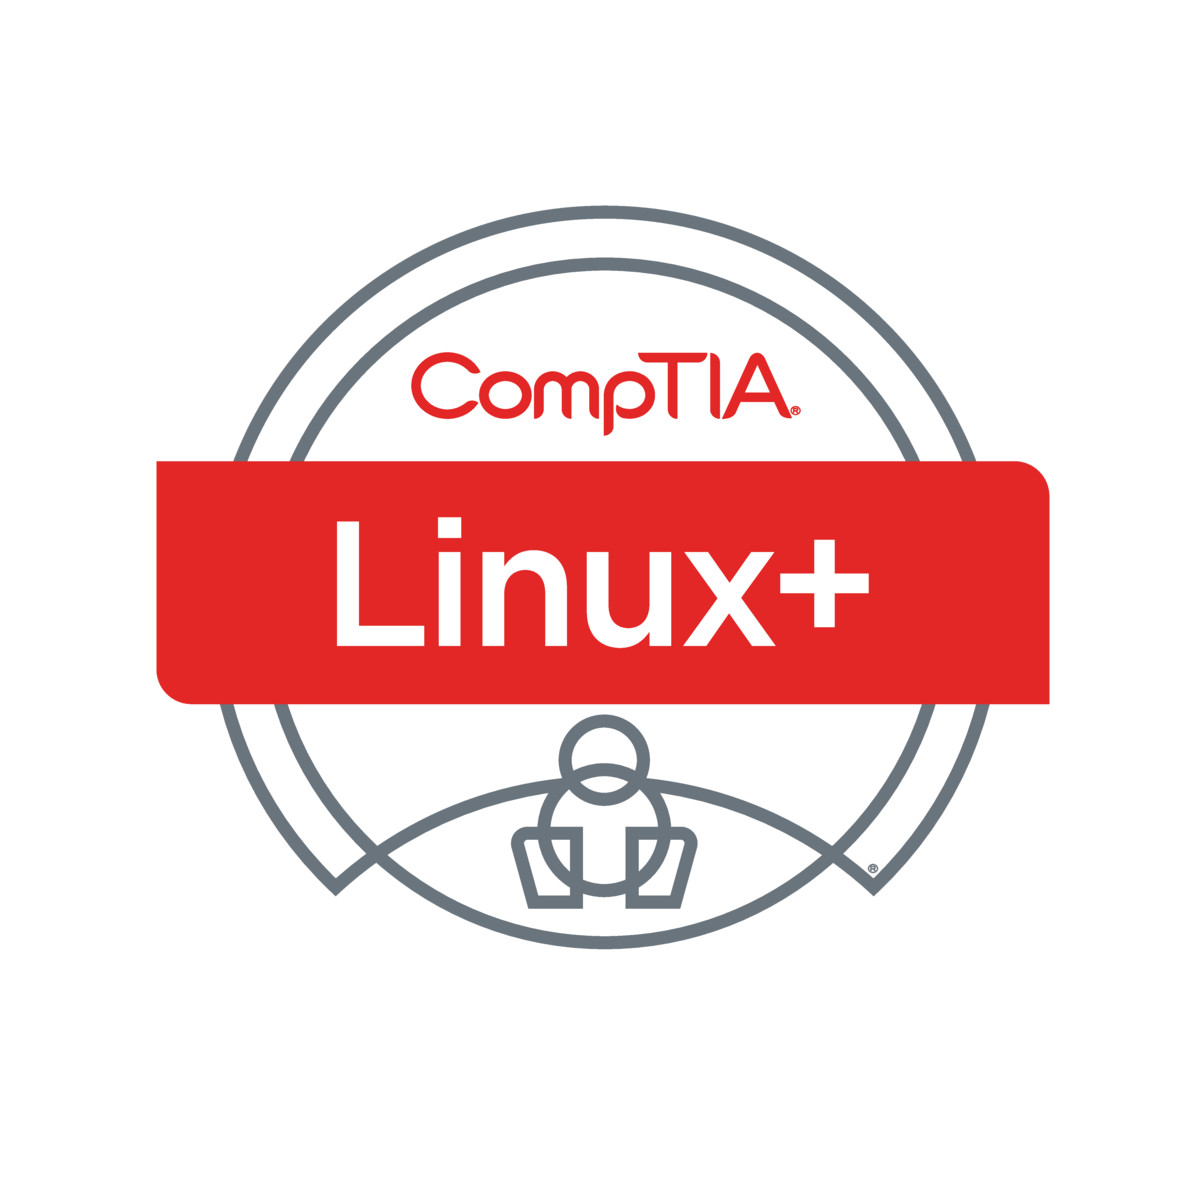 CompTIA Linux+ Logo